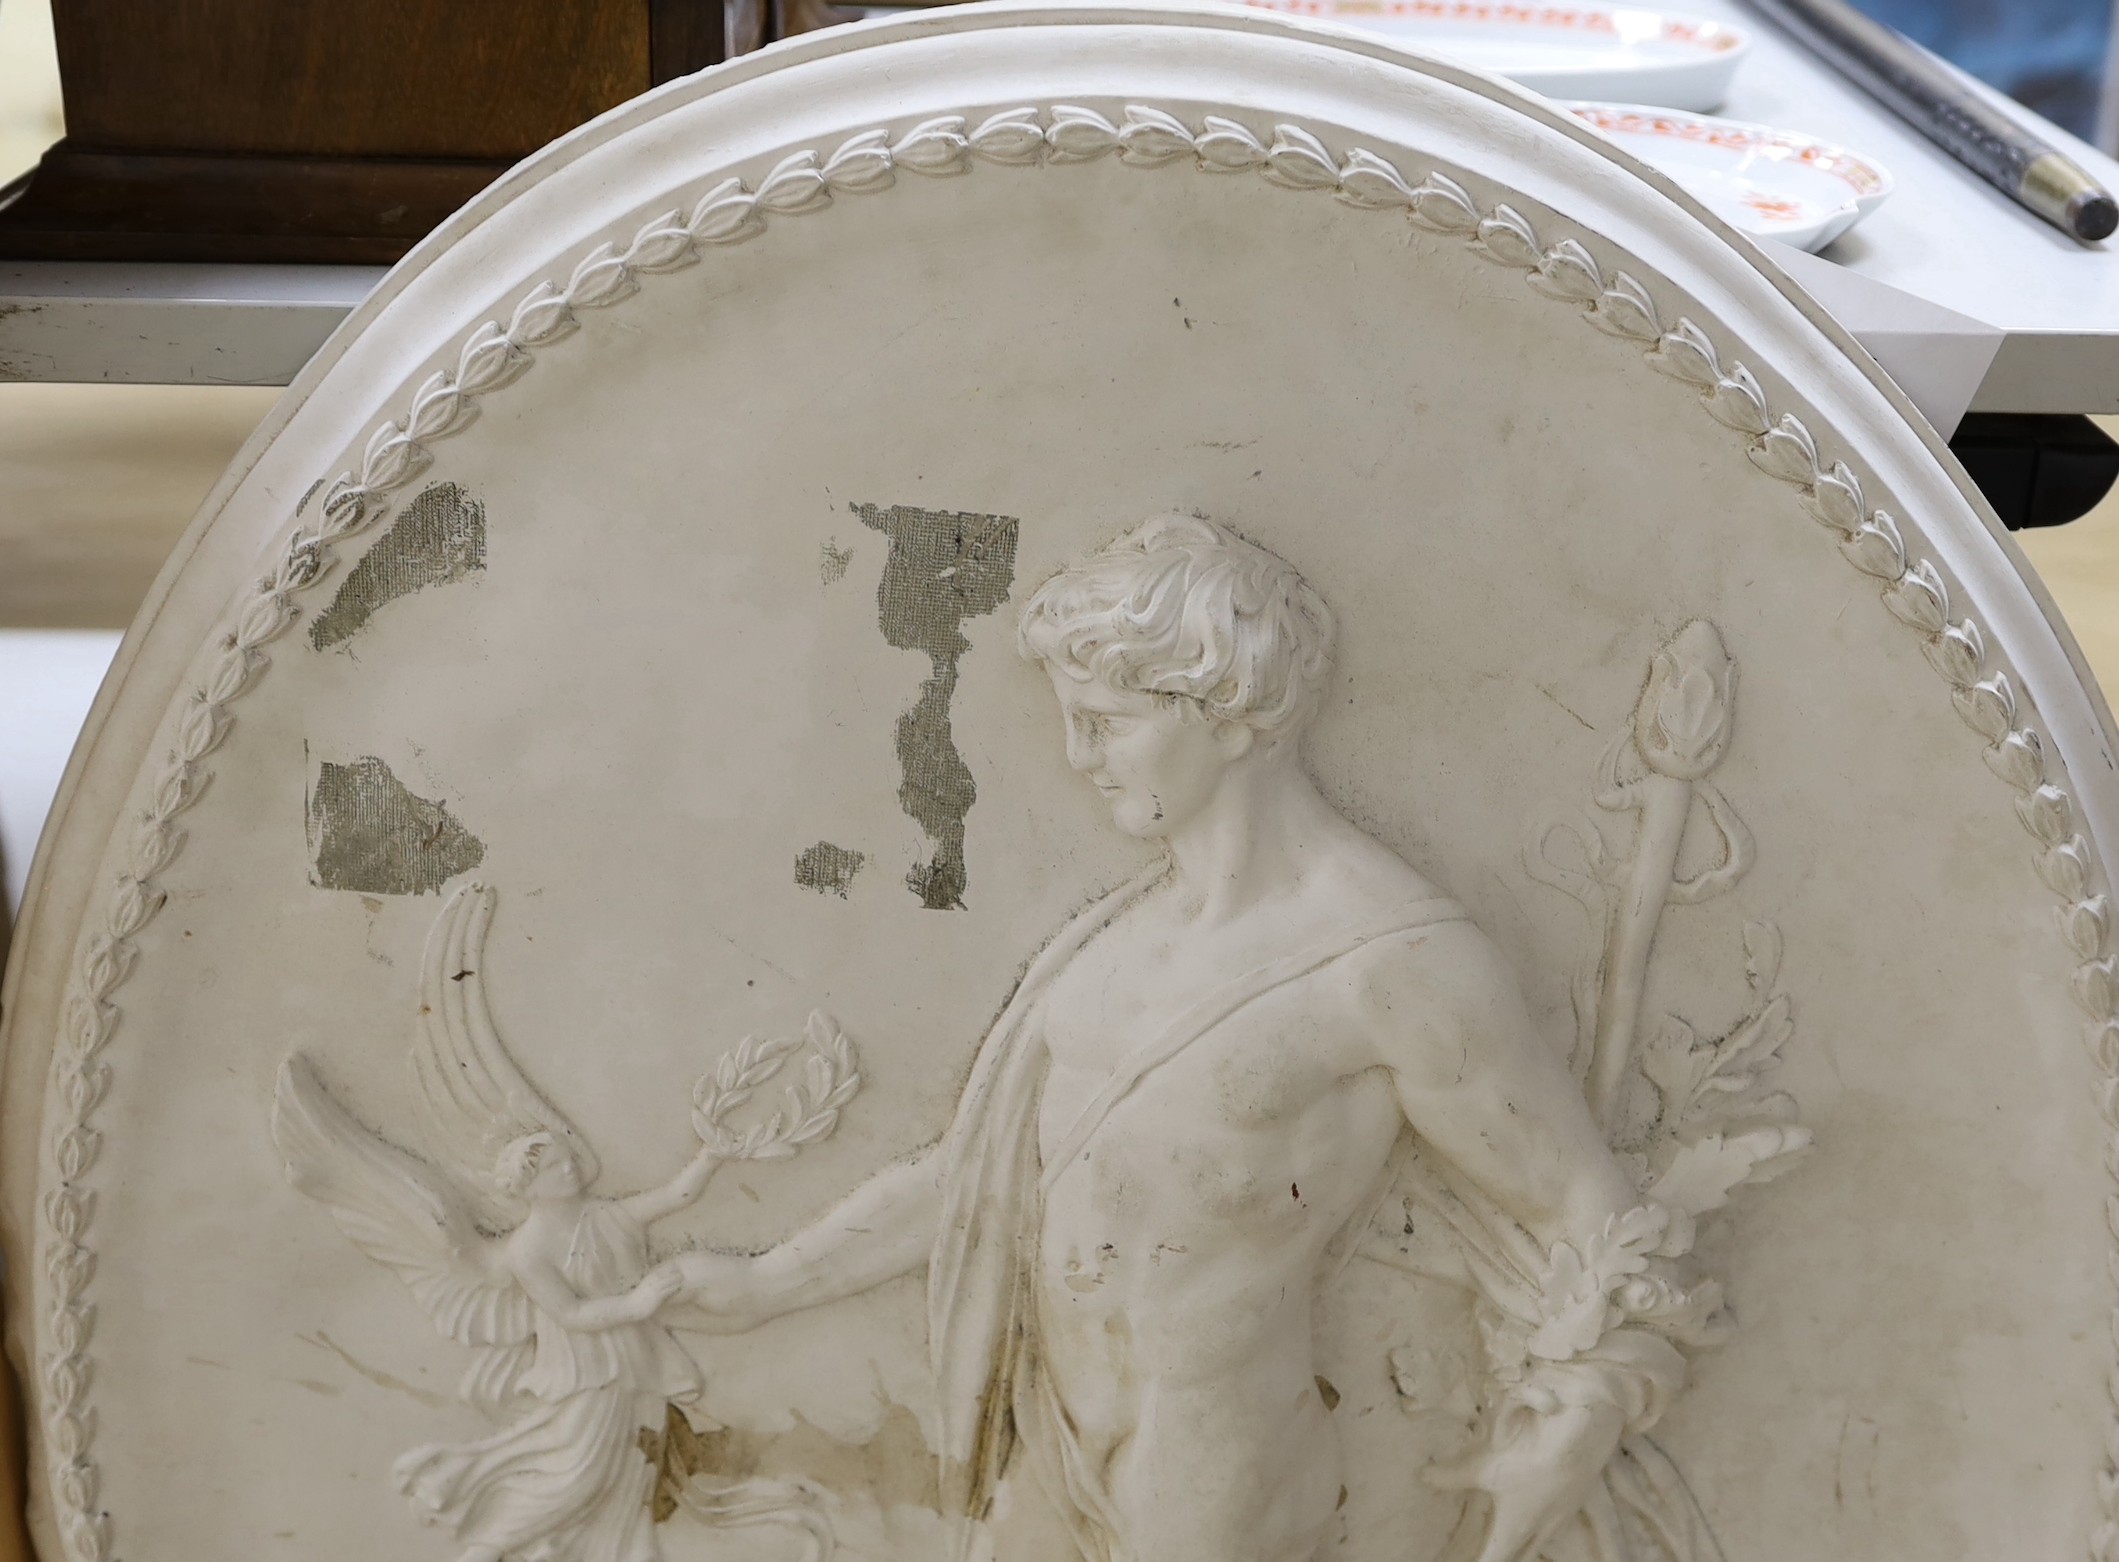 A cast plaster oval figural plaque